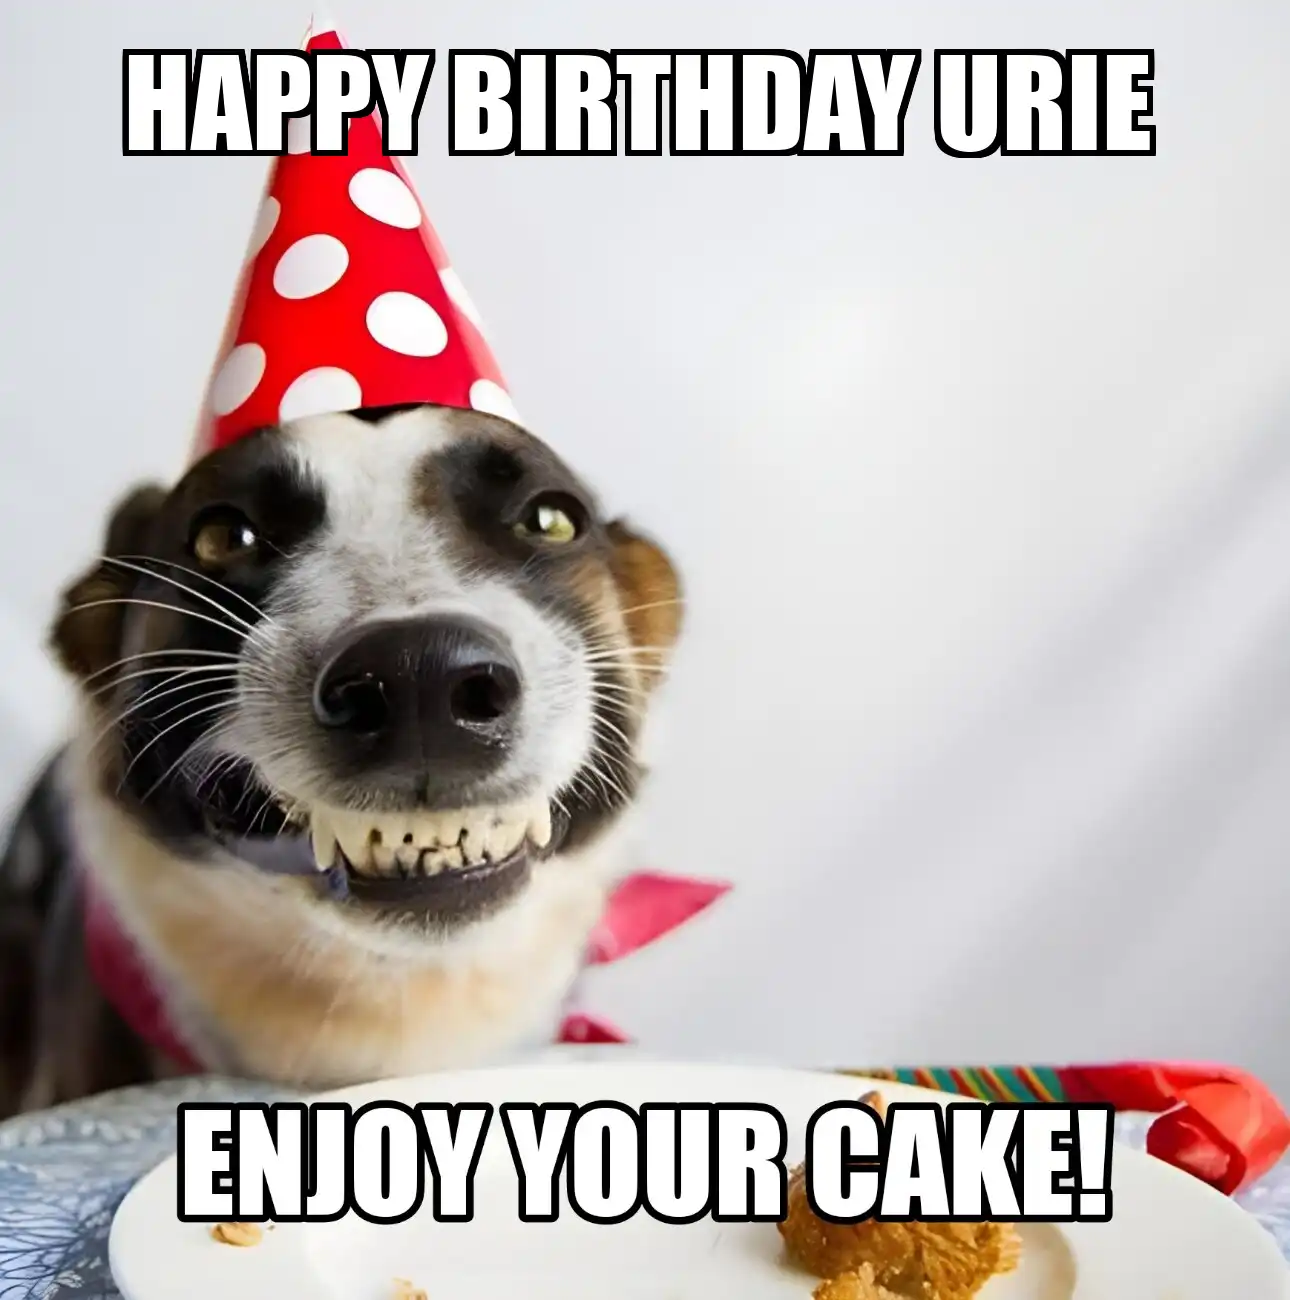 Happy Birthday Urie Enjoy Your Cake Dog Meme